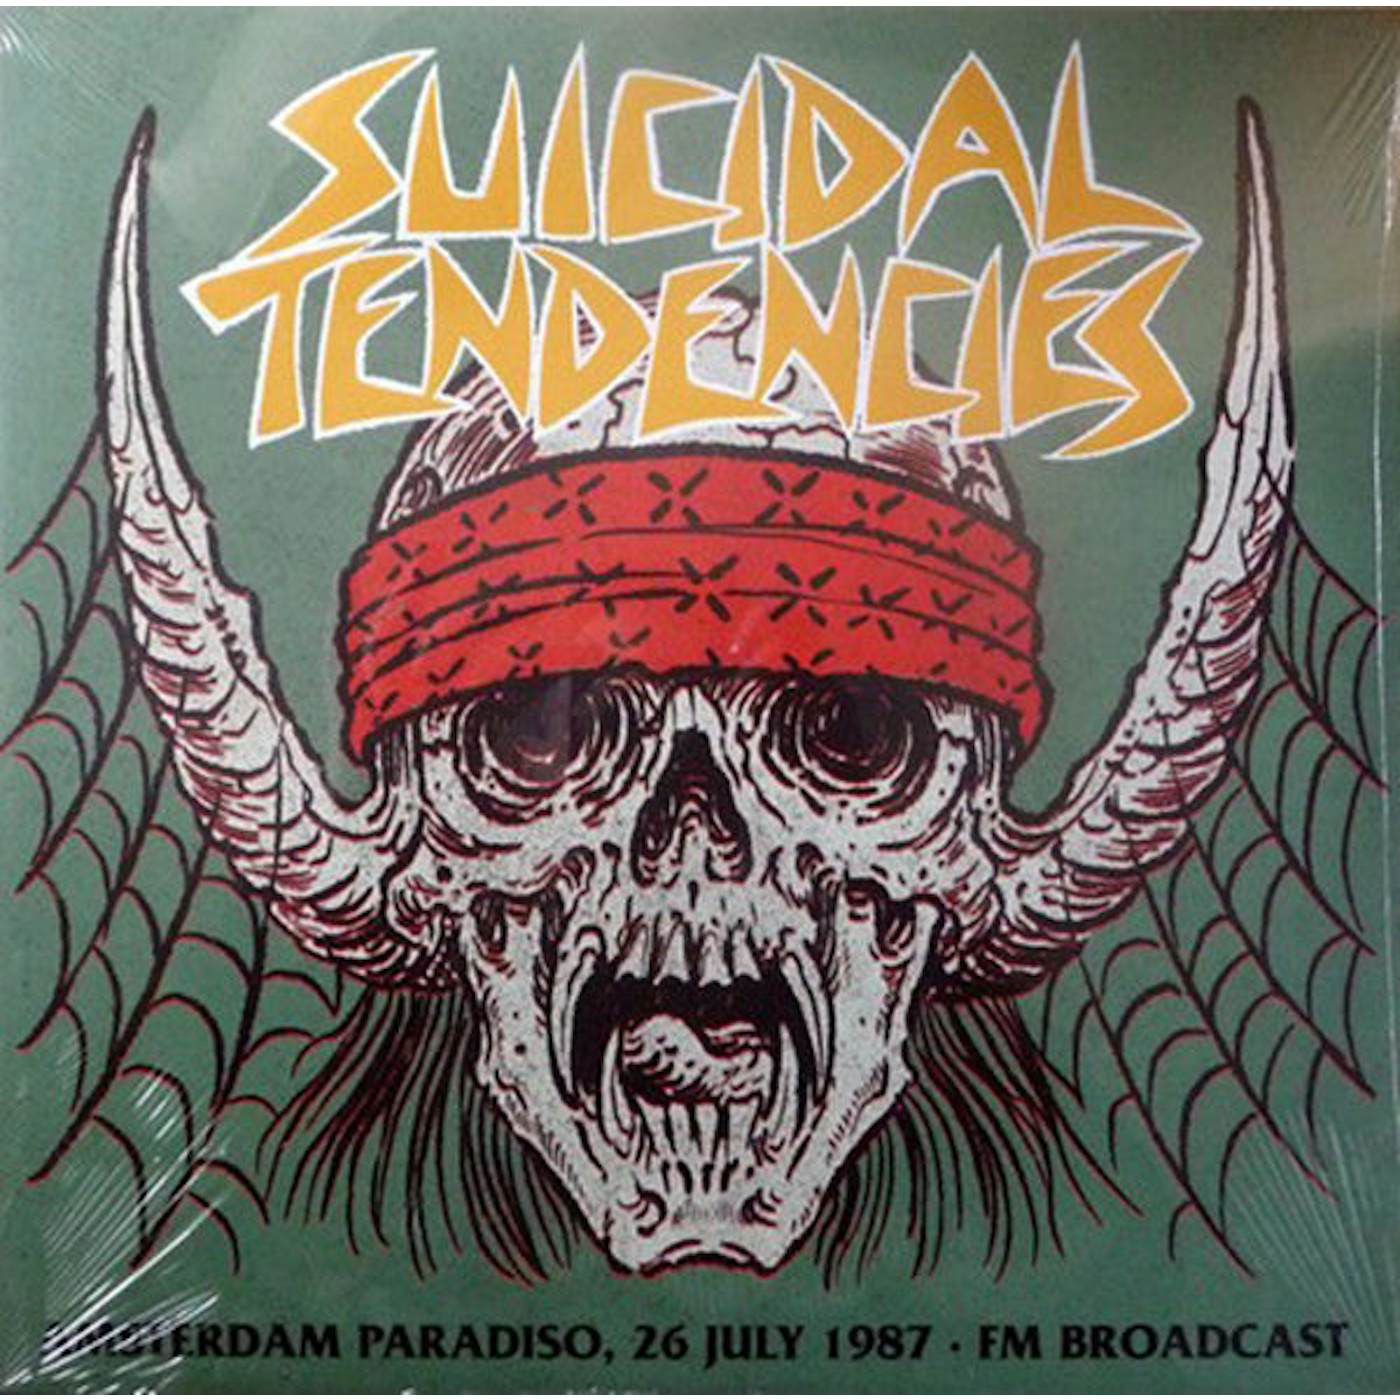 Suicidal Tendencies LP - Amsterdam Paradiso, 26 July 1987 - Fm Broadcast (Vinyl)